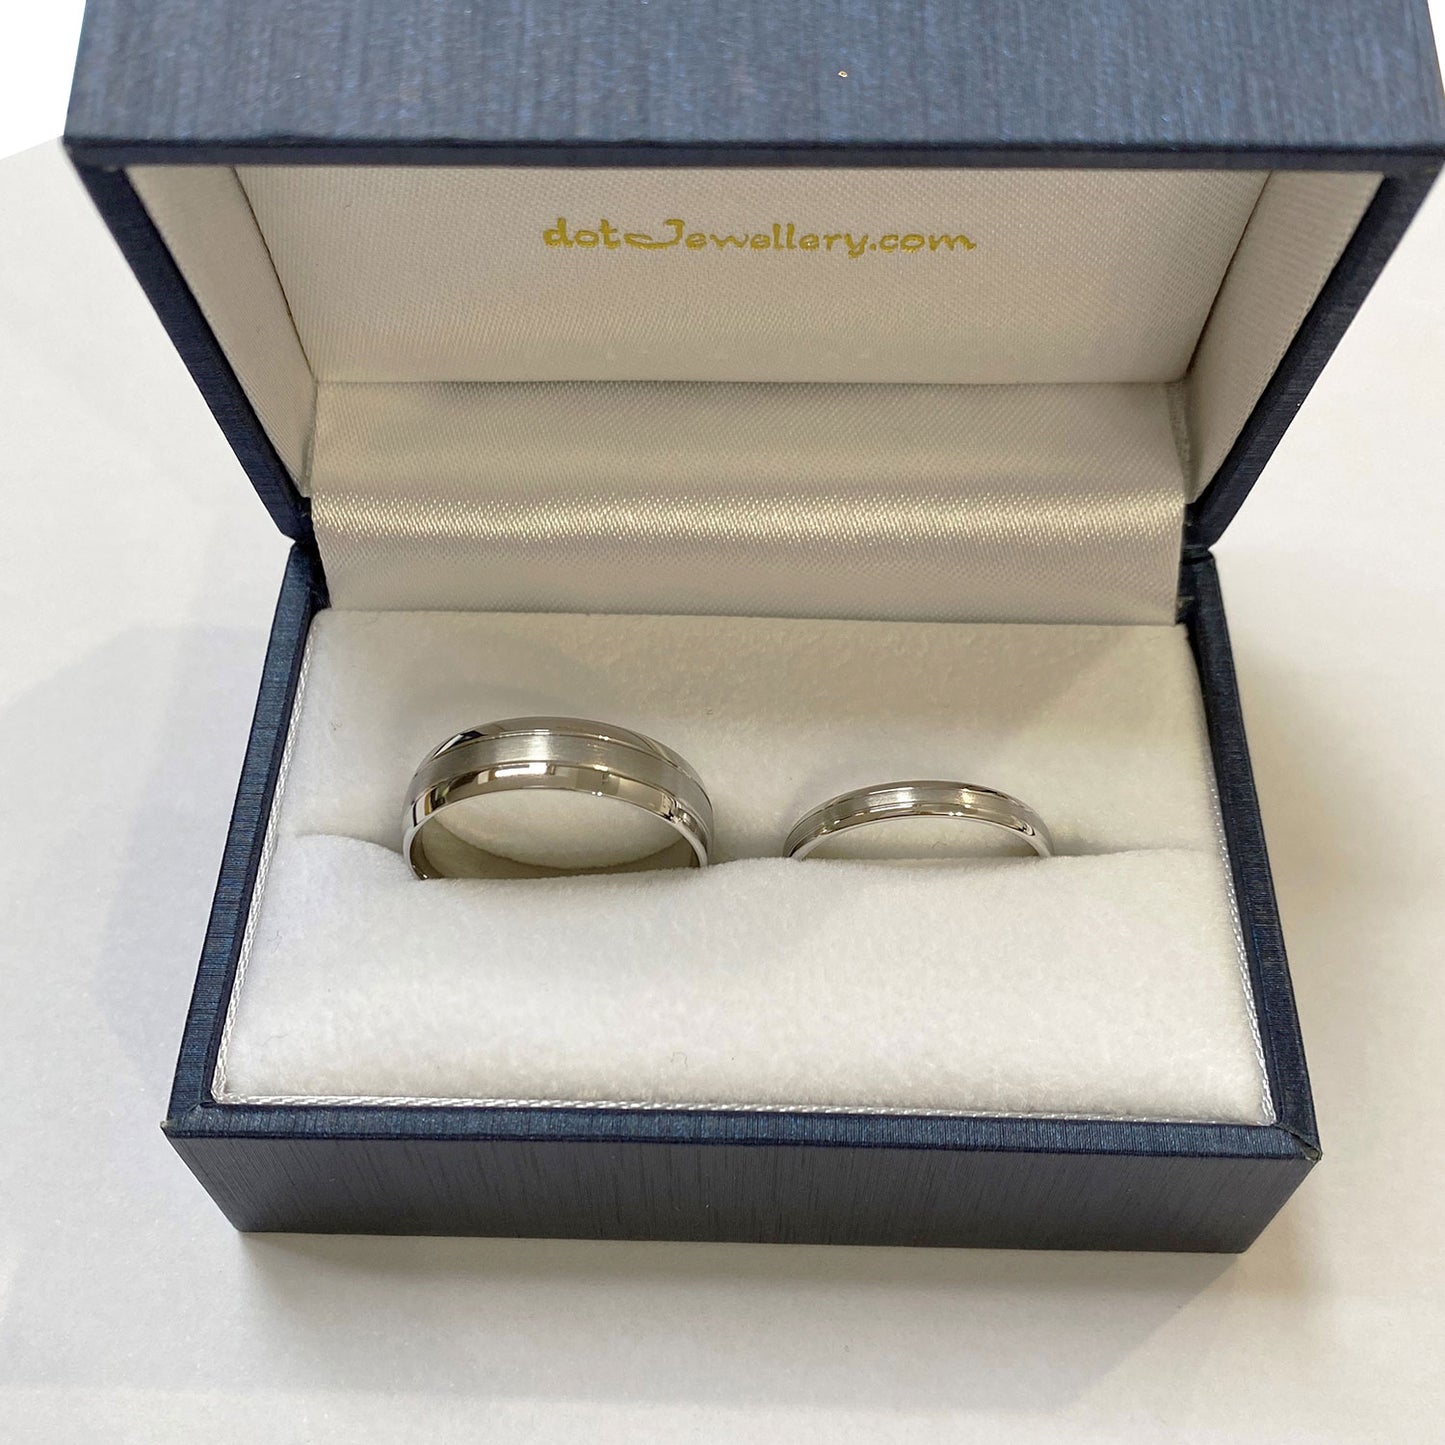 Line Shiny And Matt Finish 14ct White Gold 3mm Wedding Ring